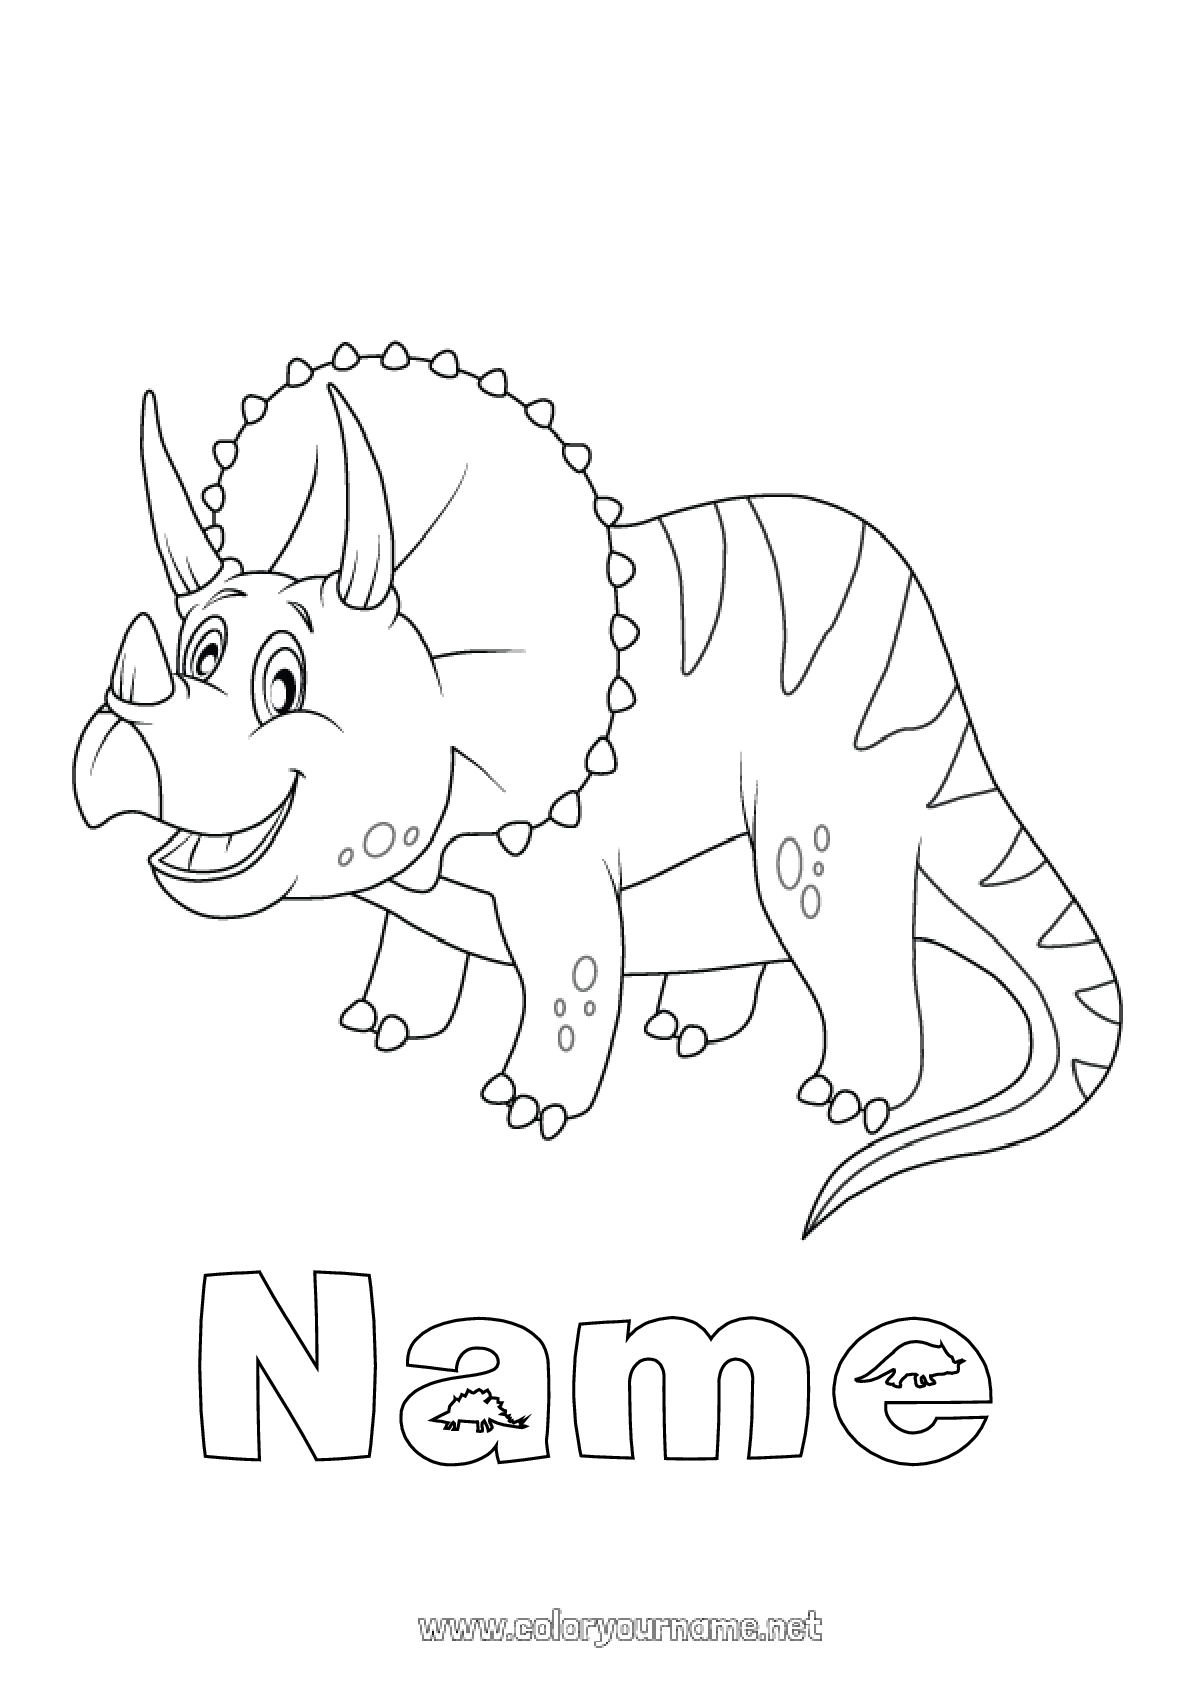 Coloring page No.1435 - Dinosaurs Animal